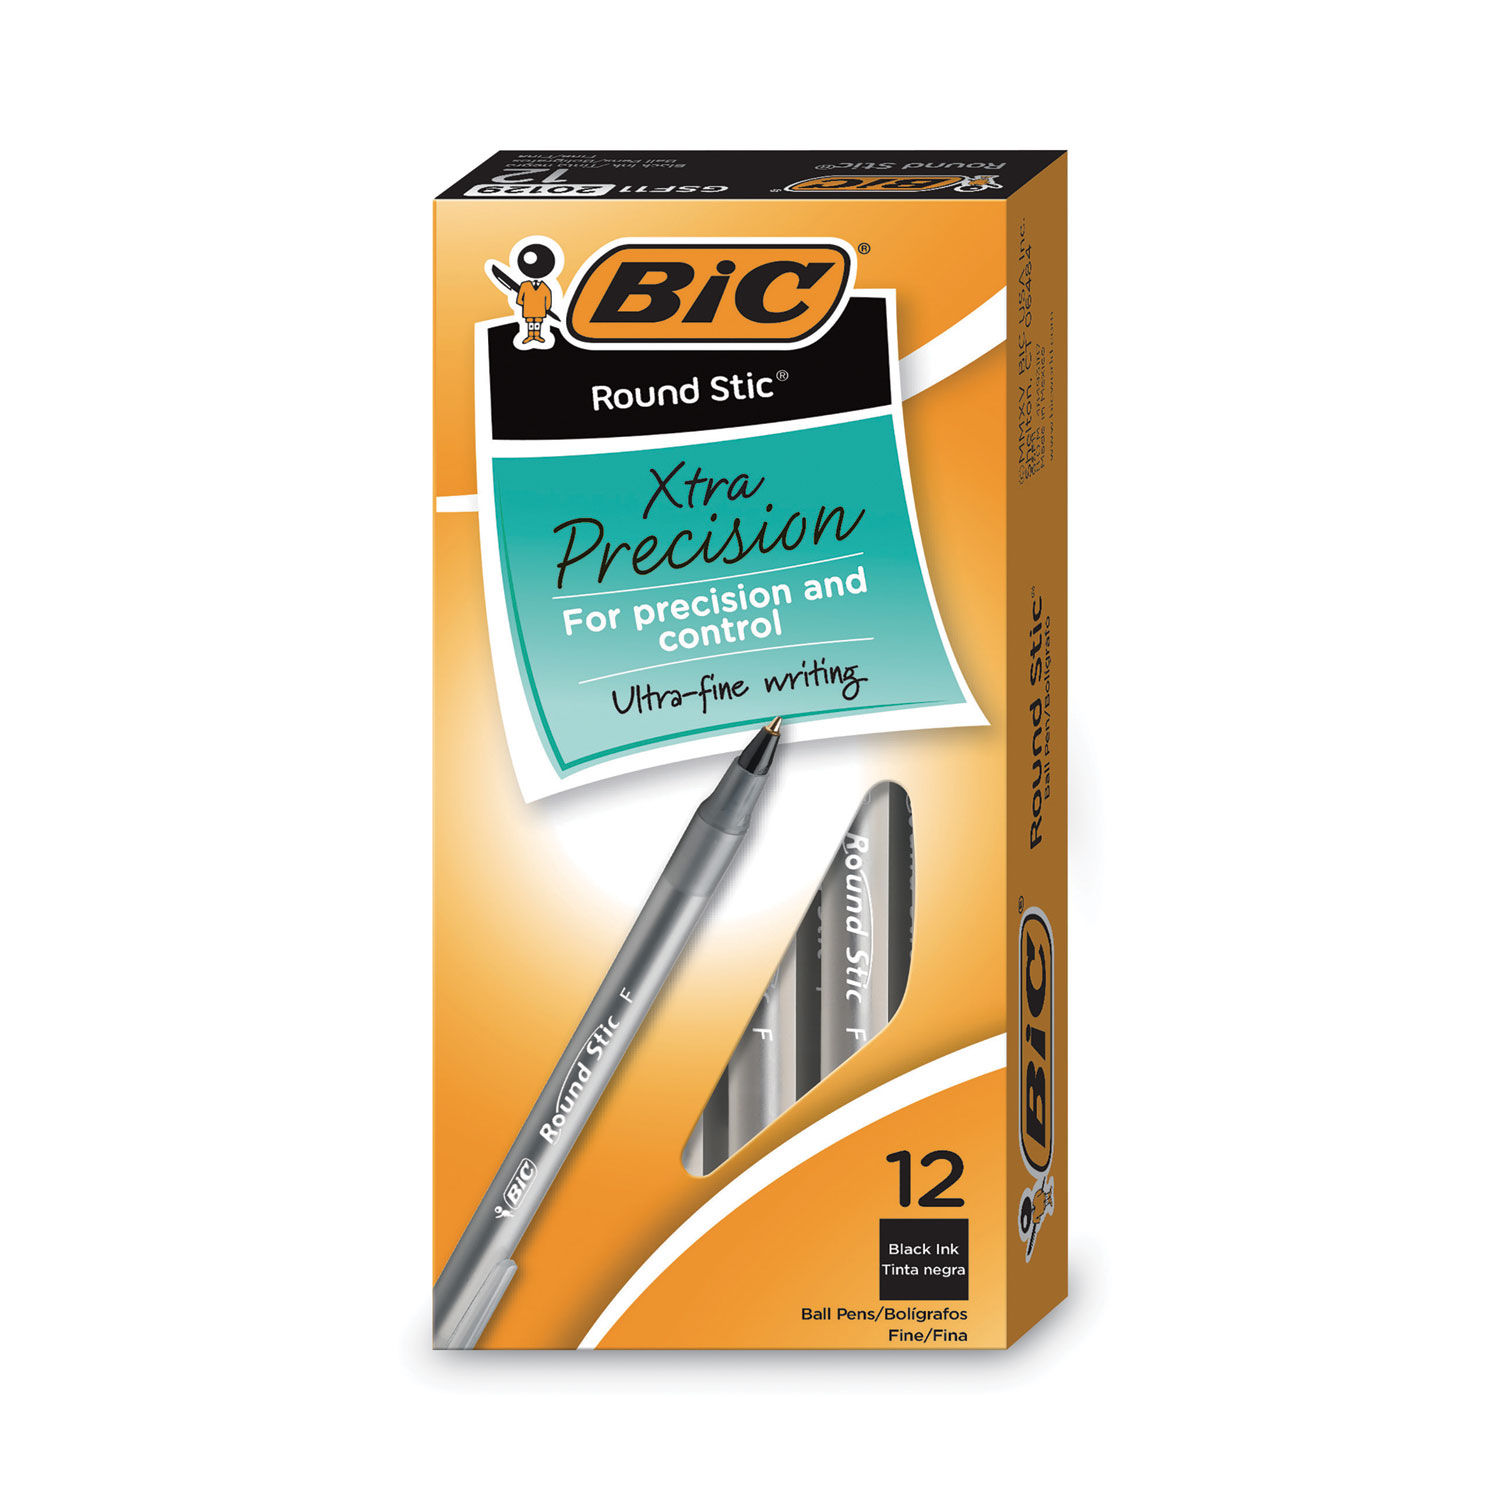 Round Stic Xtra Precision Ballpoint Pen by BICandreg; BICGSF11BK